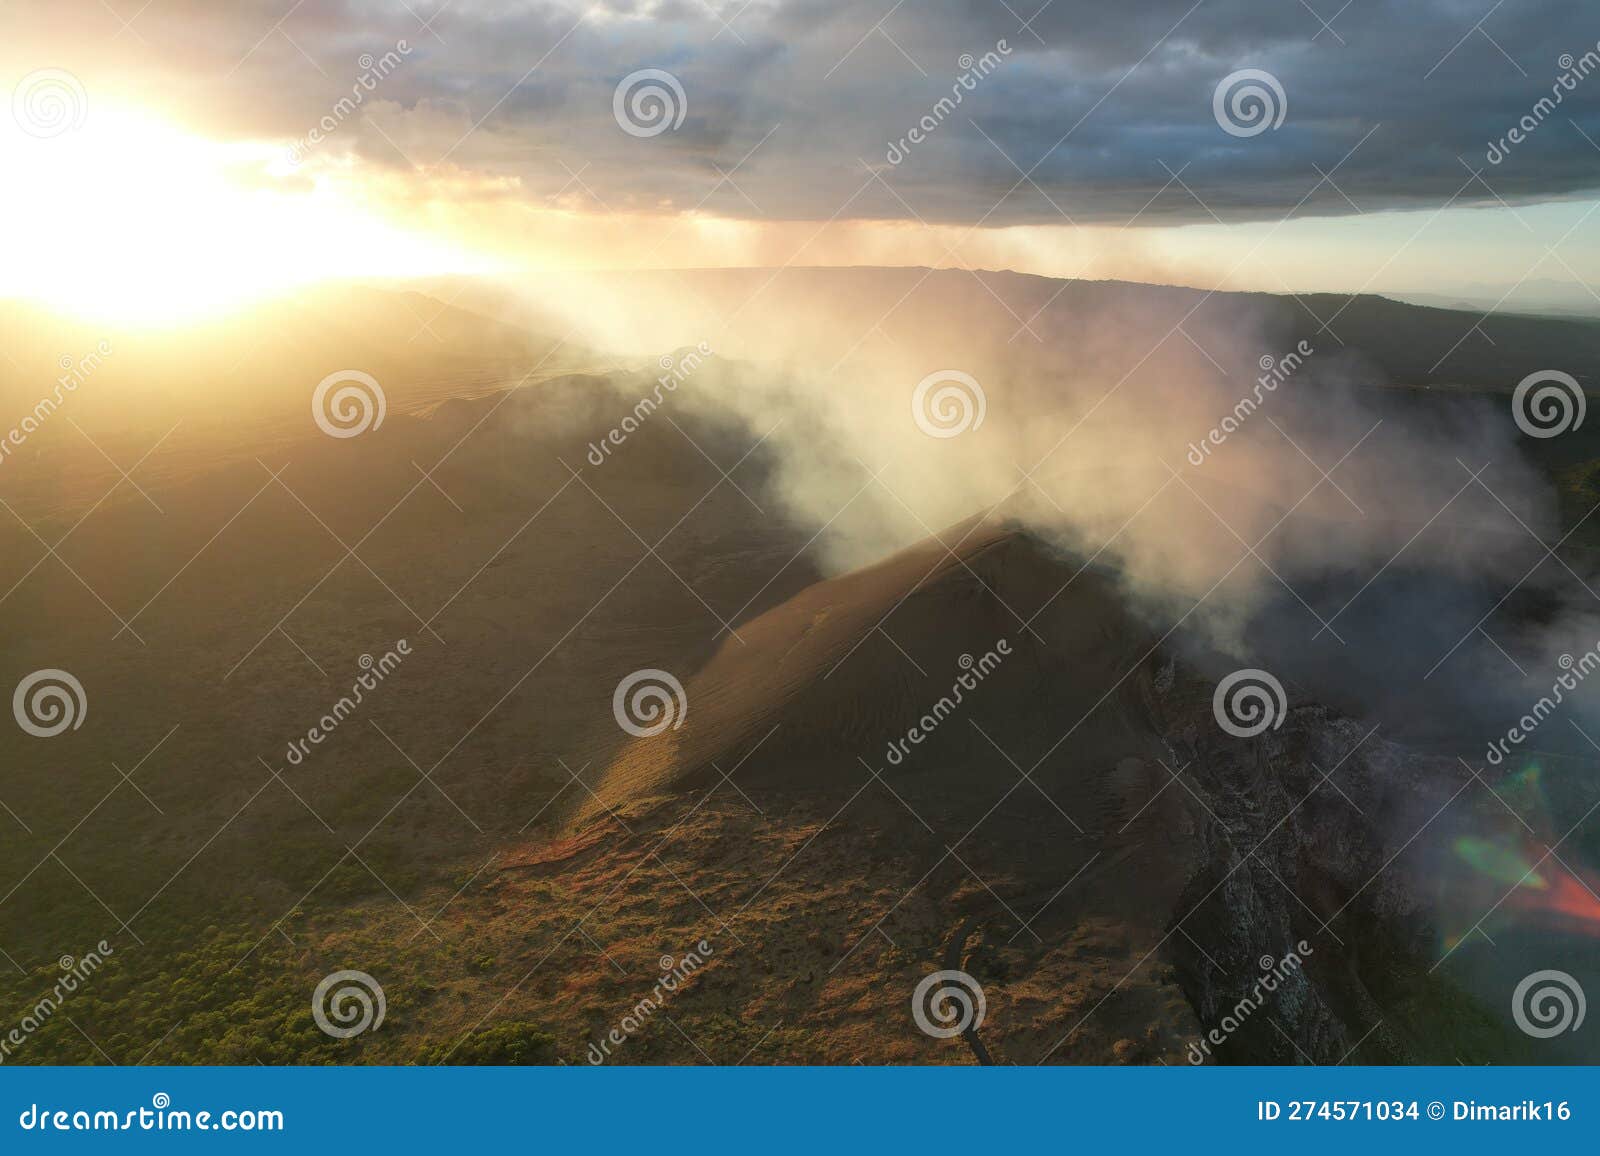 volcanic gas cover nicaragua landscape